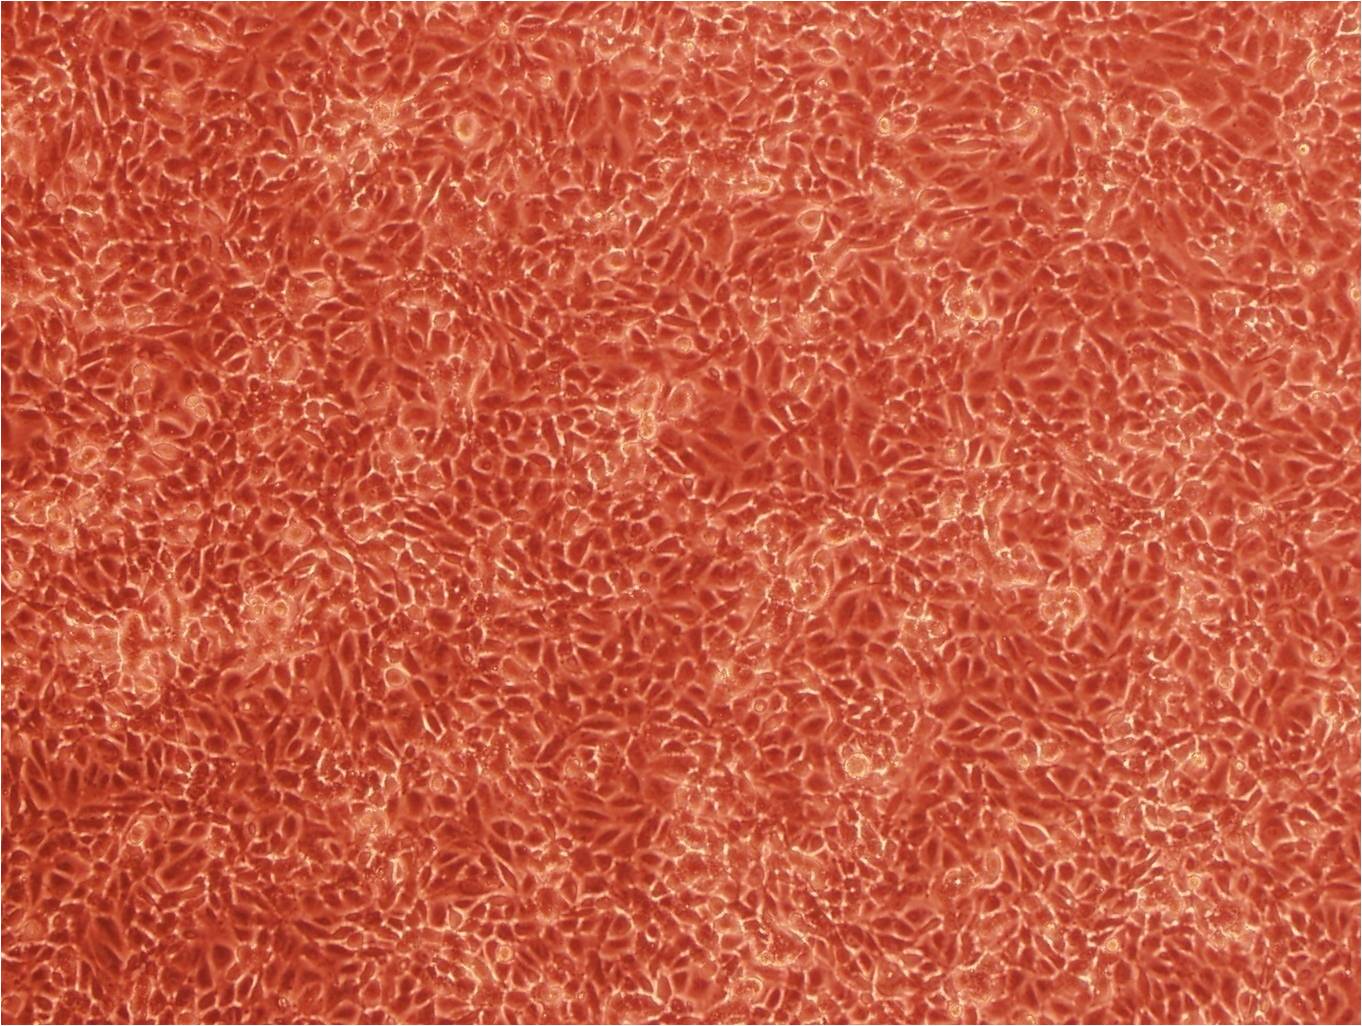 FU-OV-1 Cell|人卵巢癌细胞